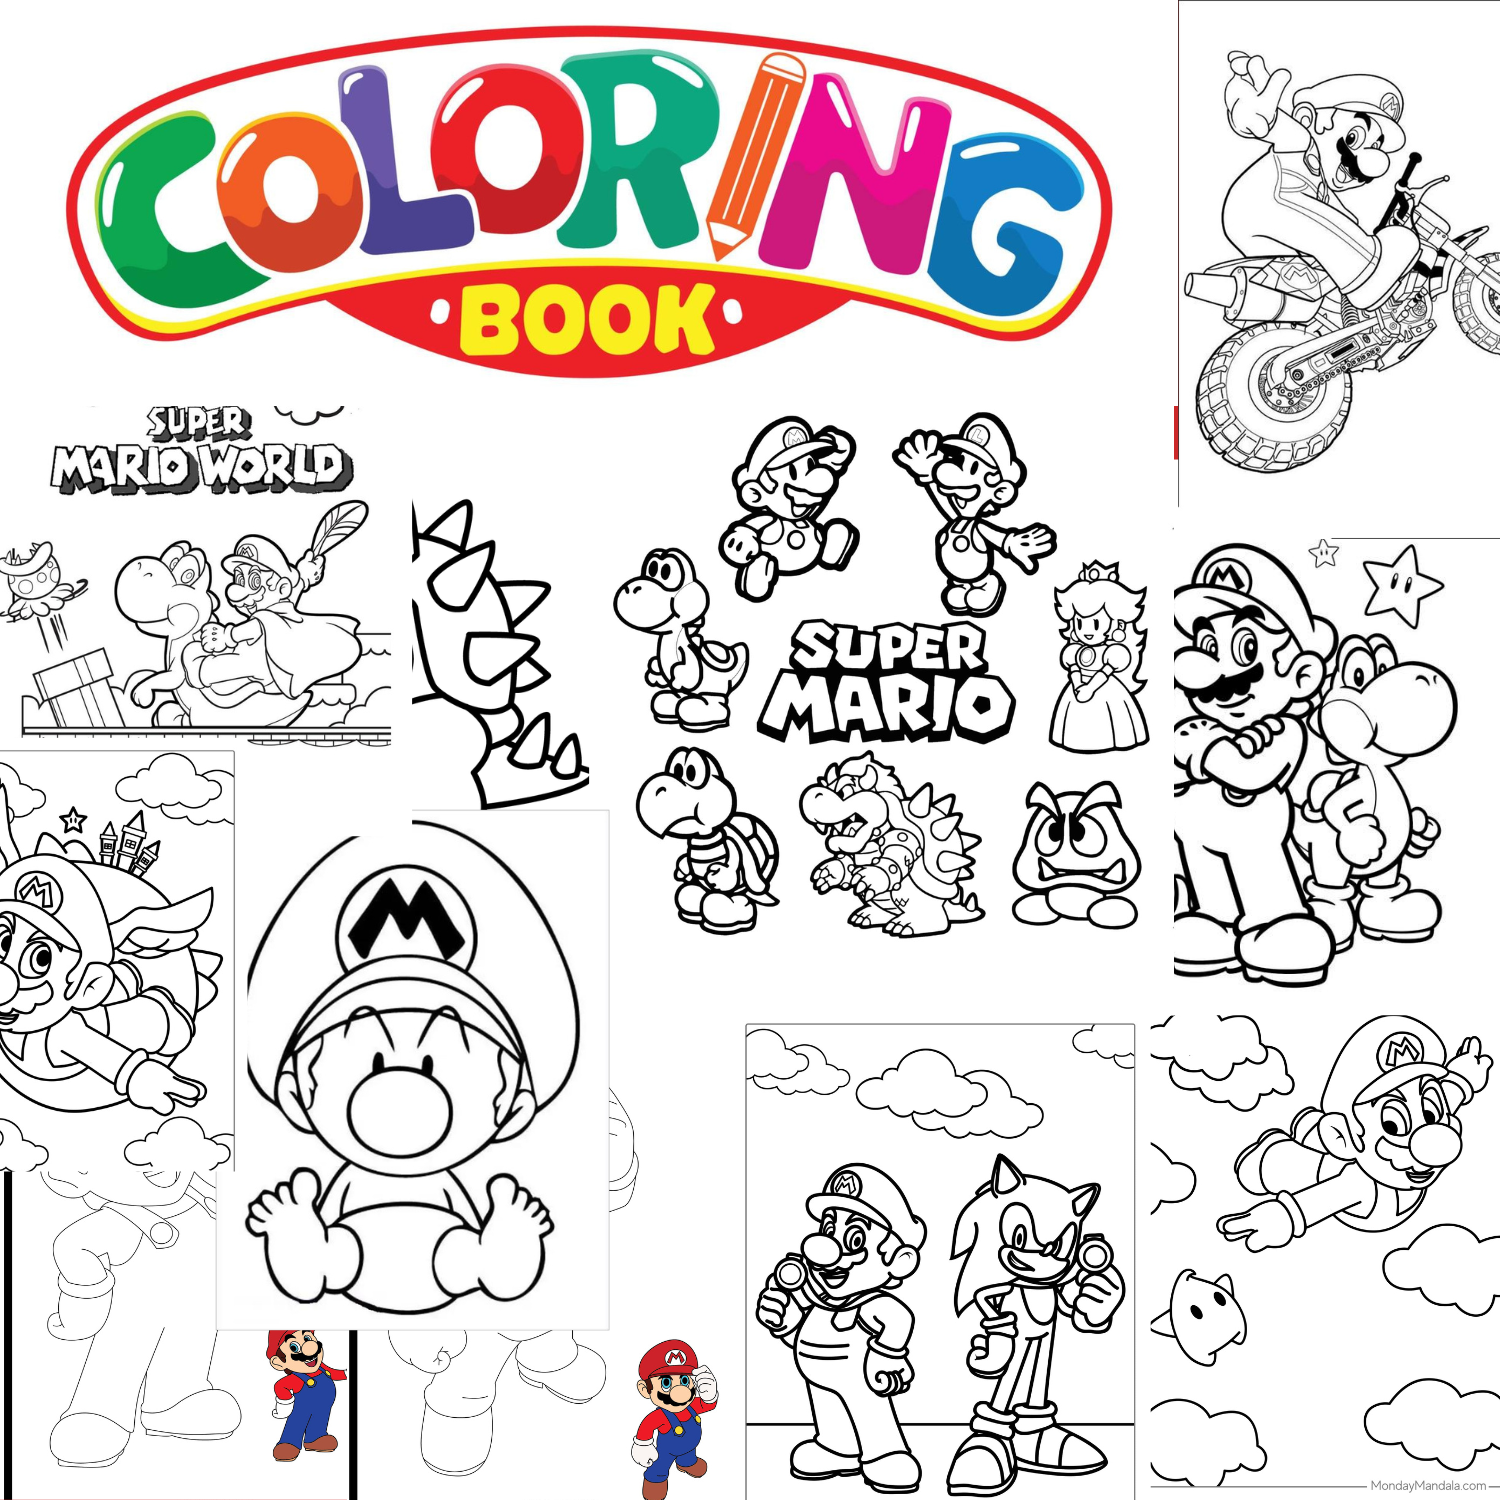 Super mario coloring book super mario coloring pages made by teachers